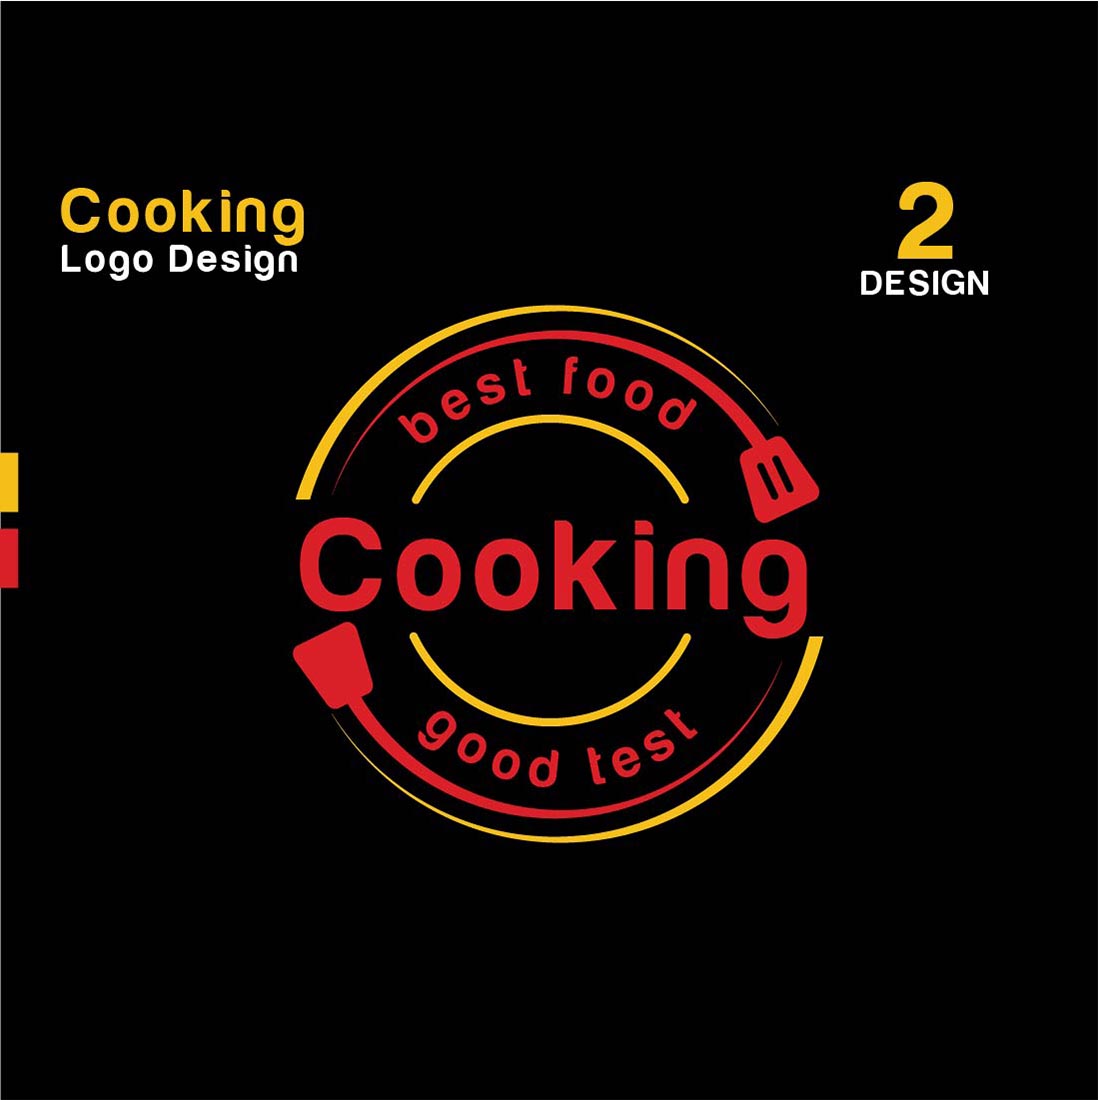 2 Fast Food Editable Logo Design cover image.